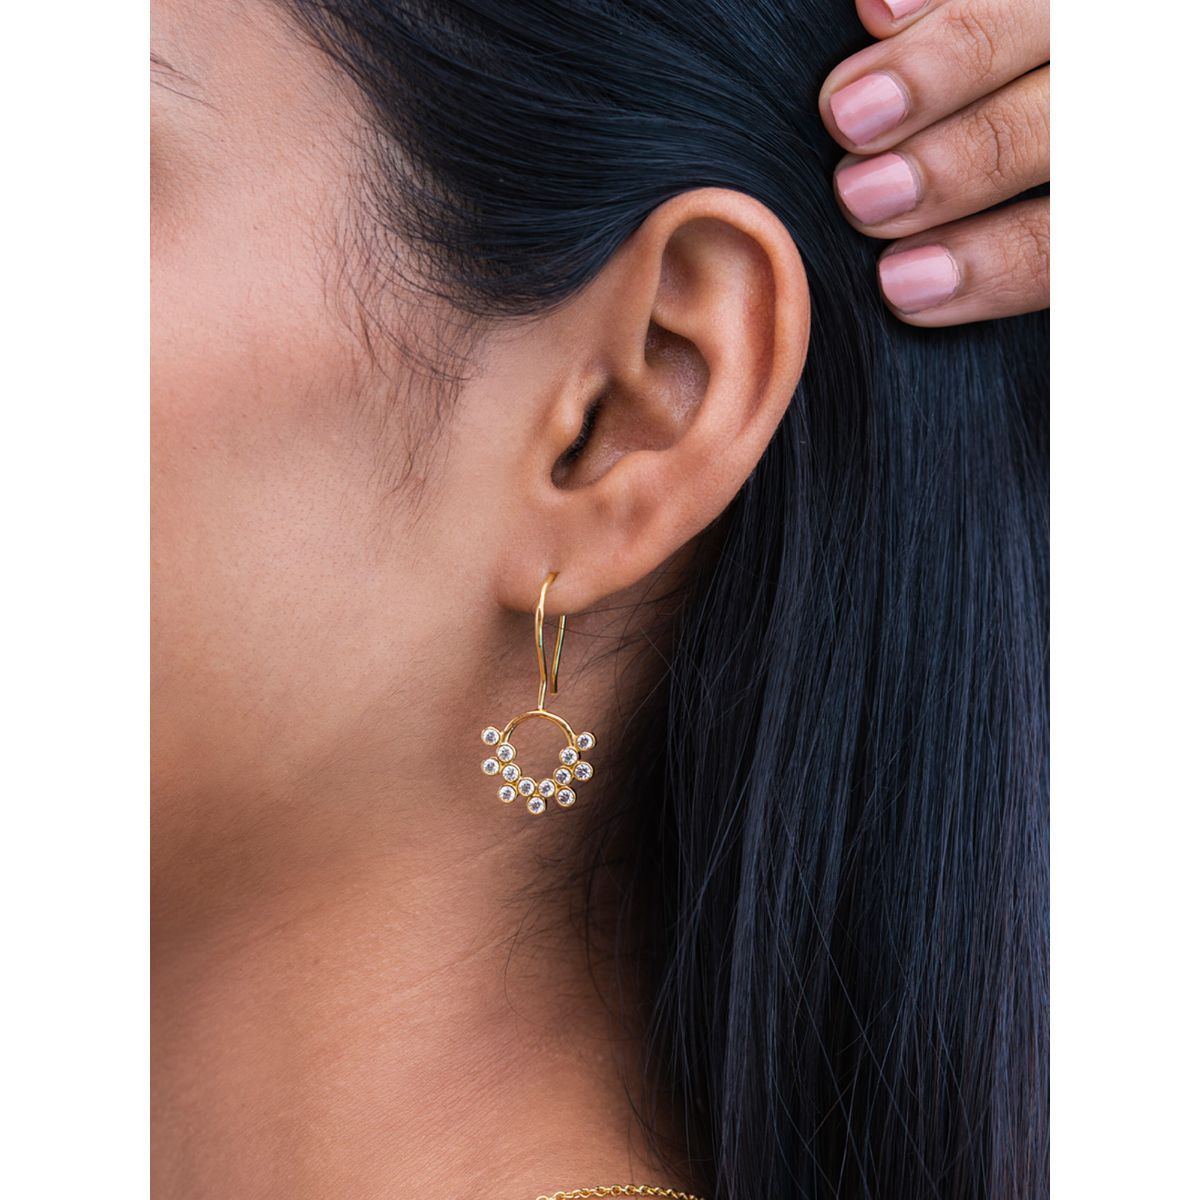 Shaya by CaratLane Nagmori Inspired Hoop Earrings Buy Shaya by CaratLane  Nagmori Inspired Hoop Earrings Online at Best Price in India  Nykaa